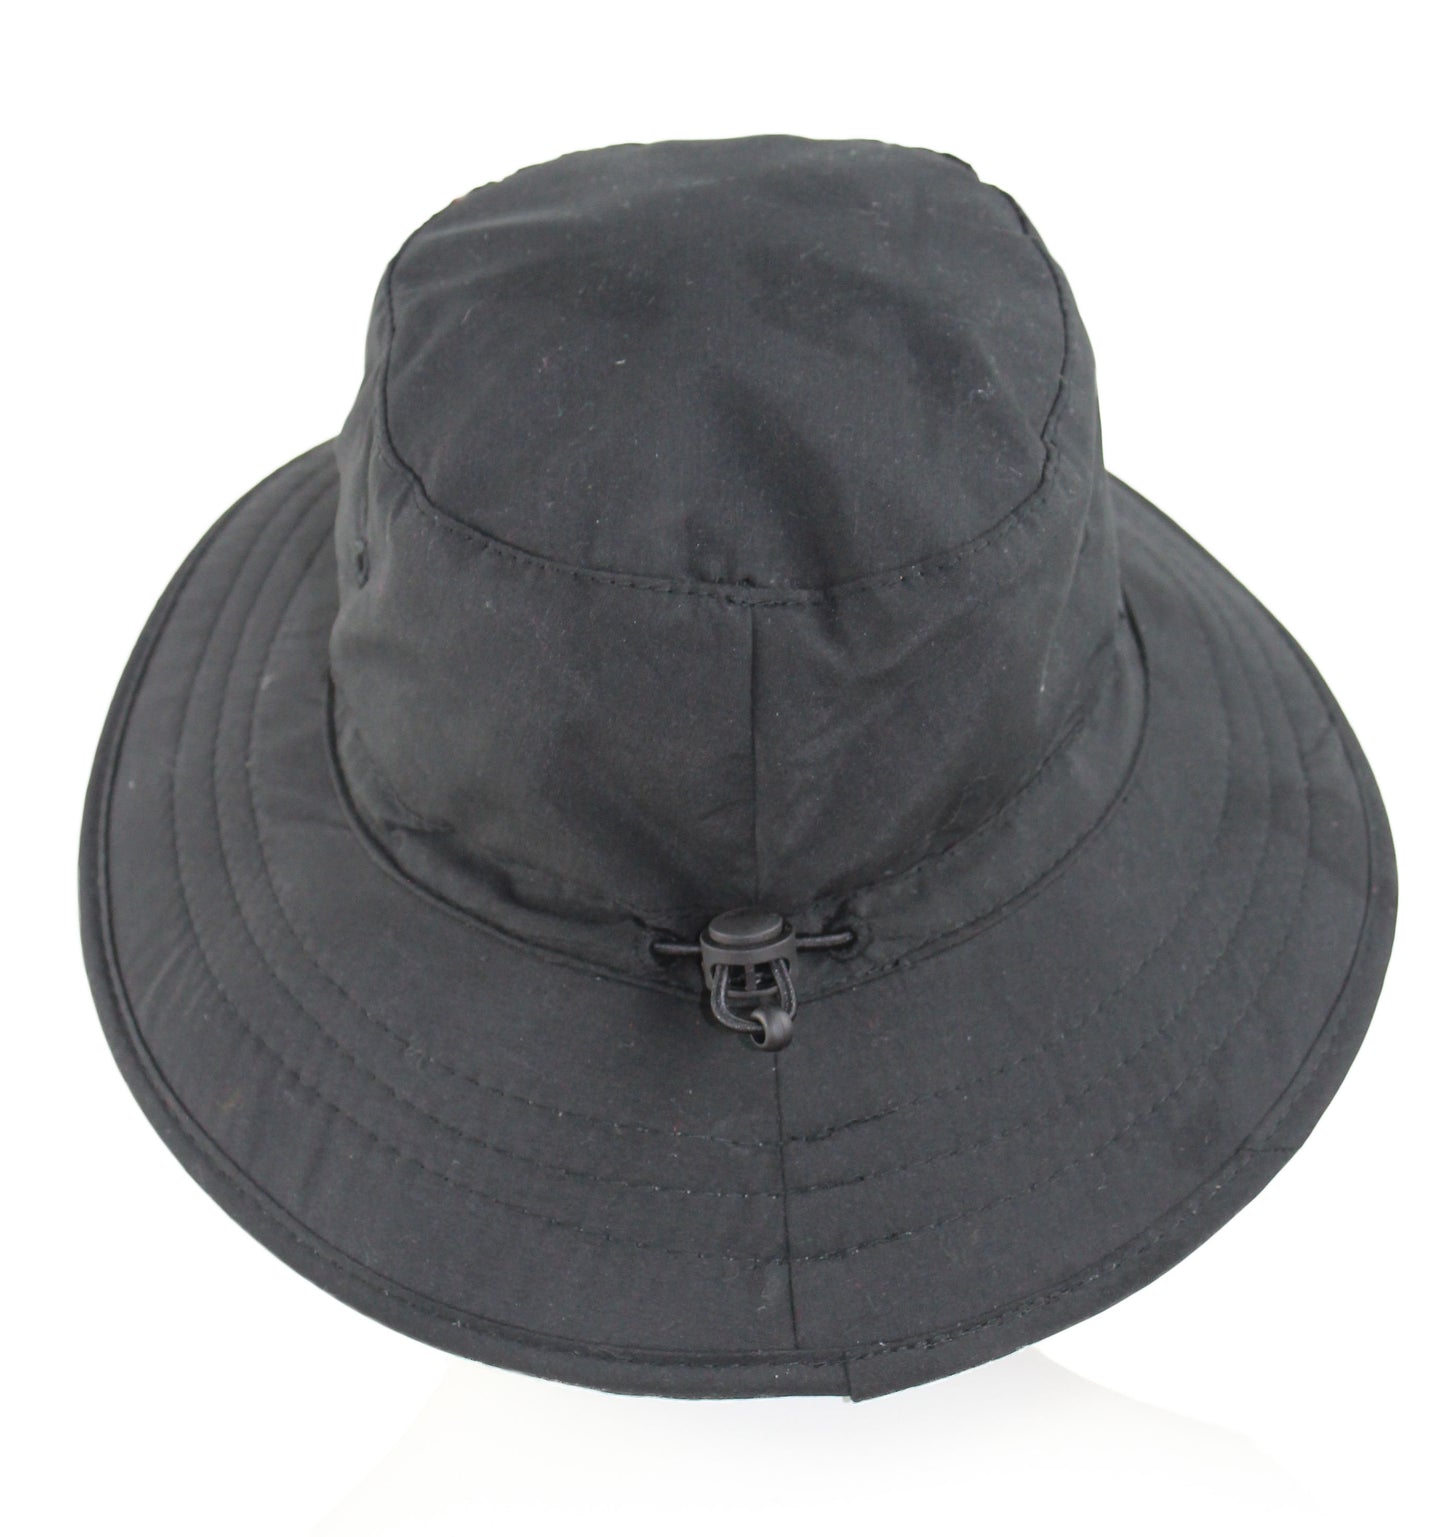 ESSENDON PRIMARY HYBRID HAT